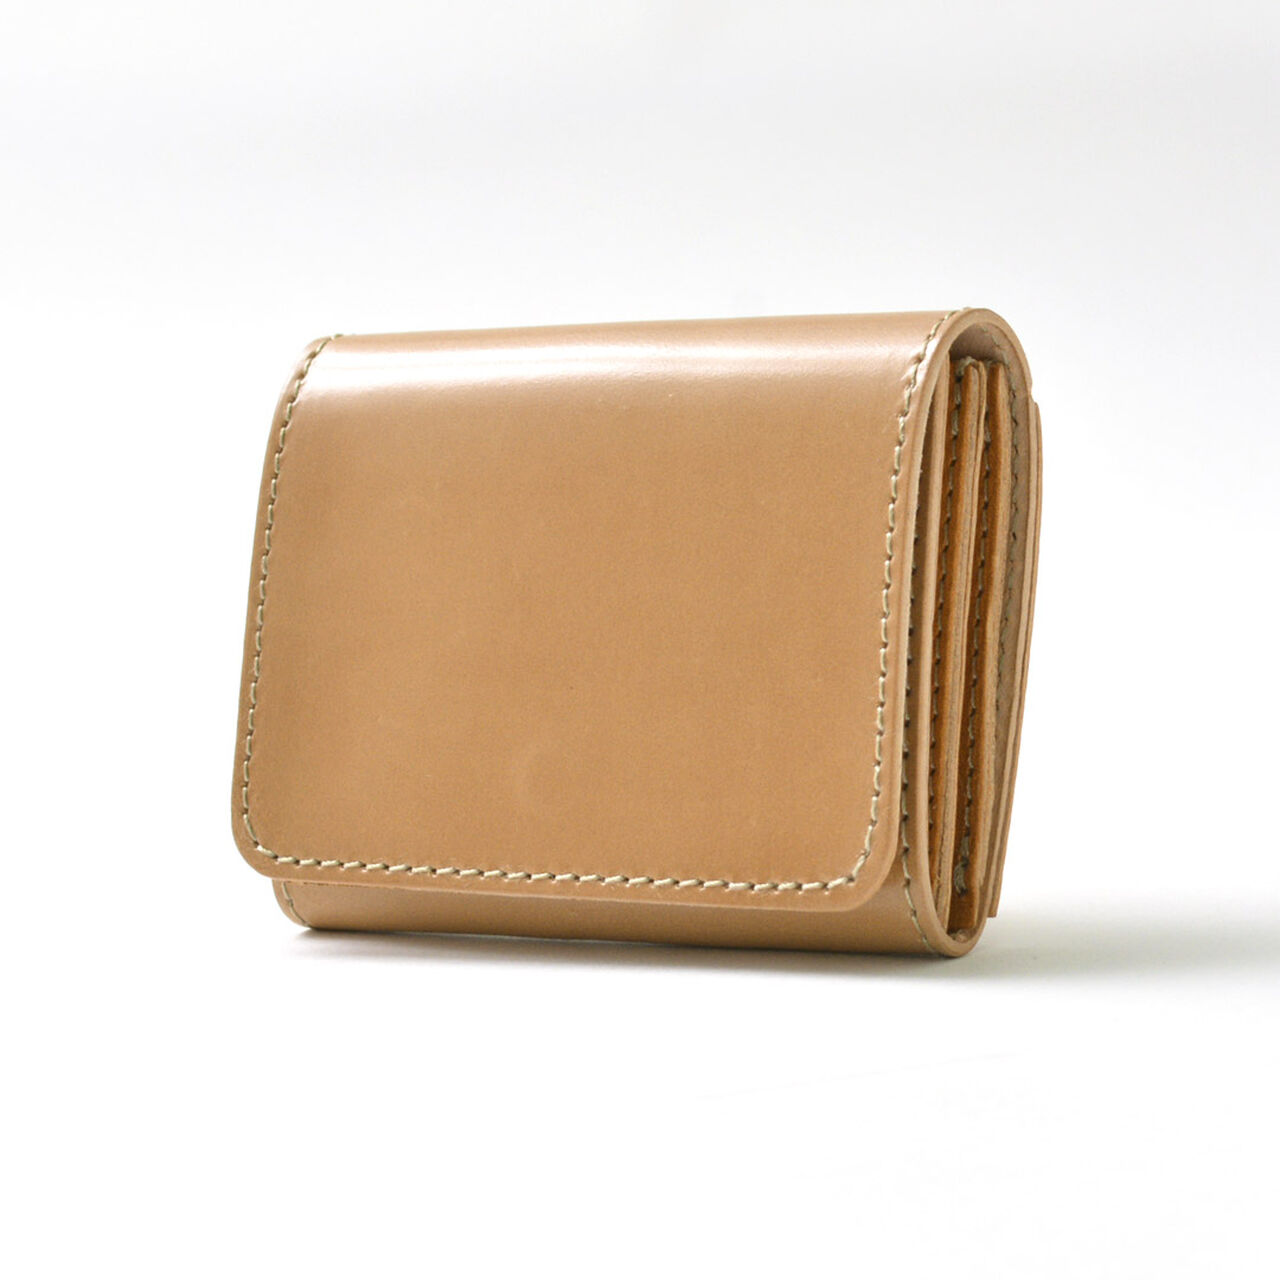 Cordovan compact wallet,Beige, large image number 0